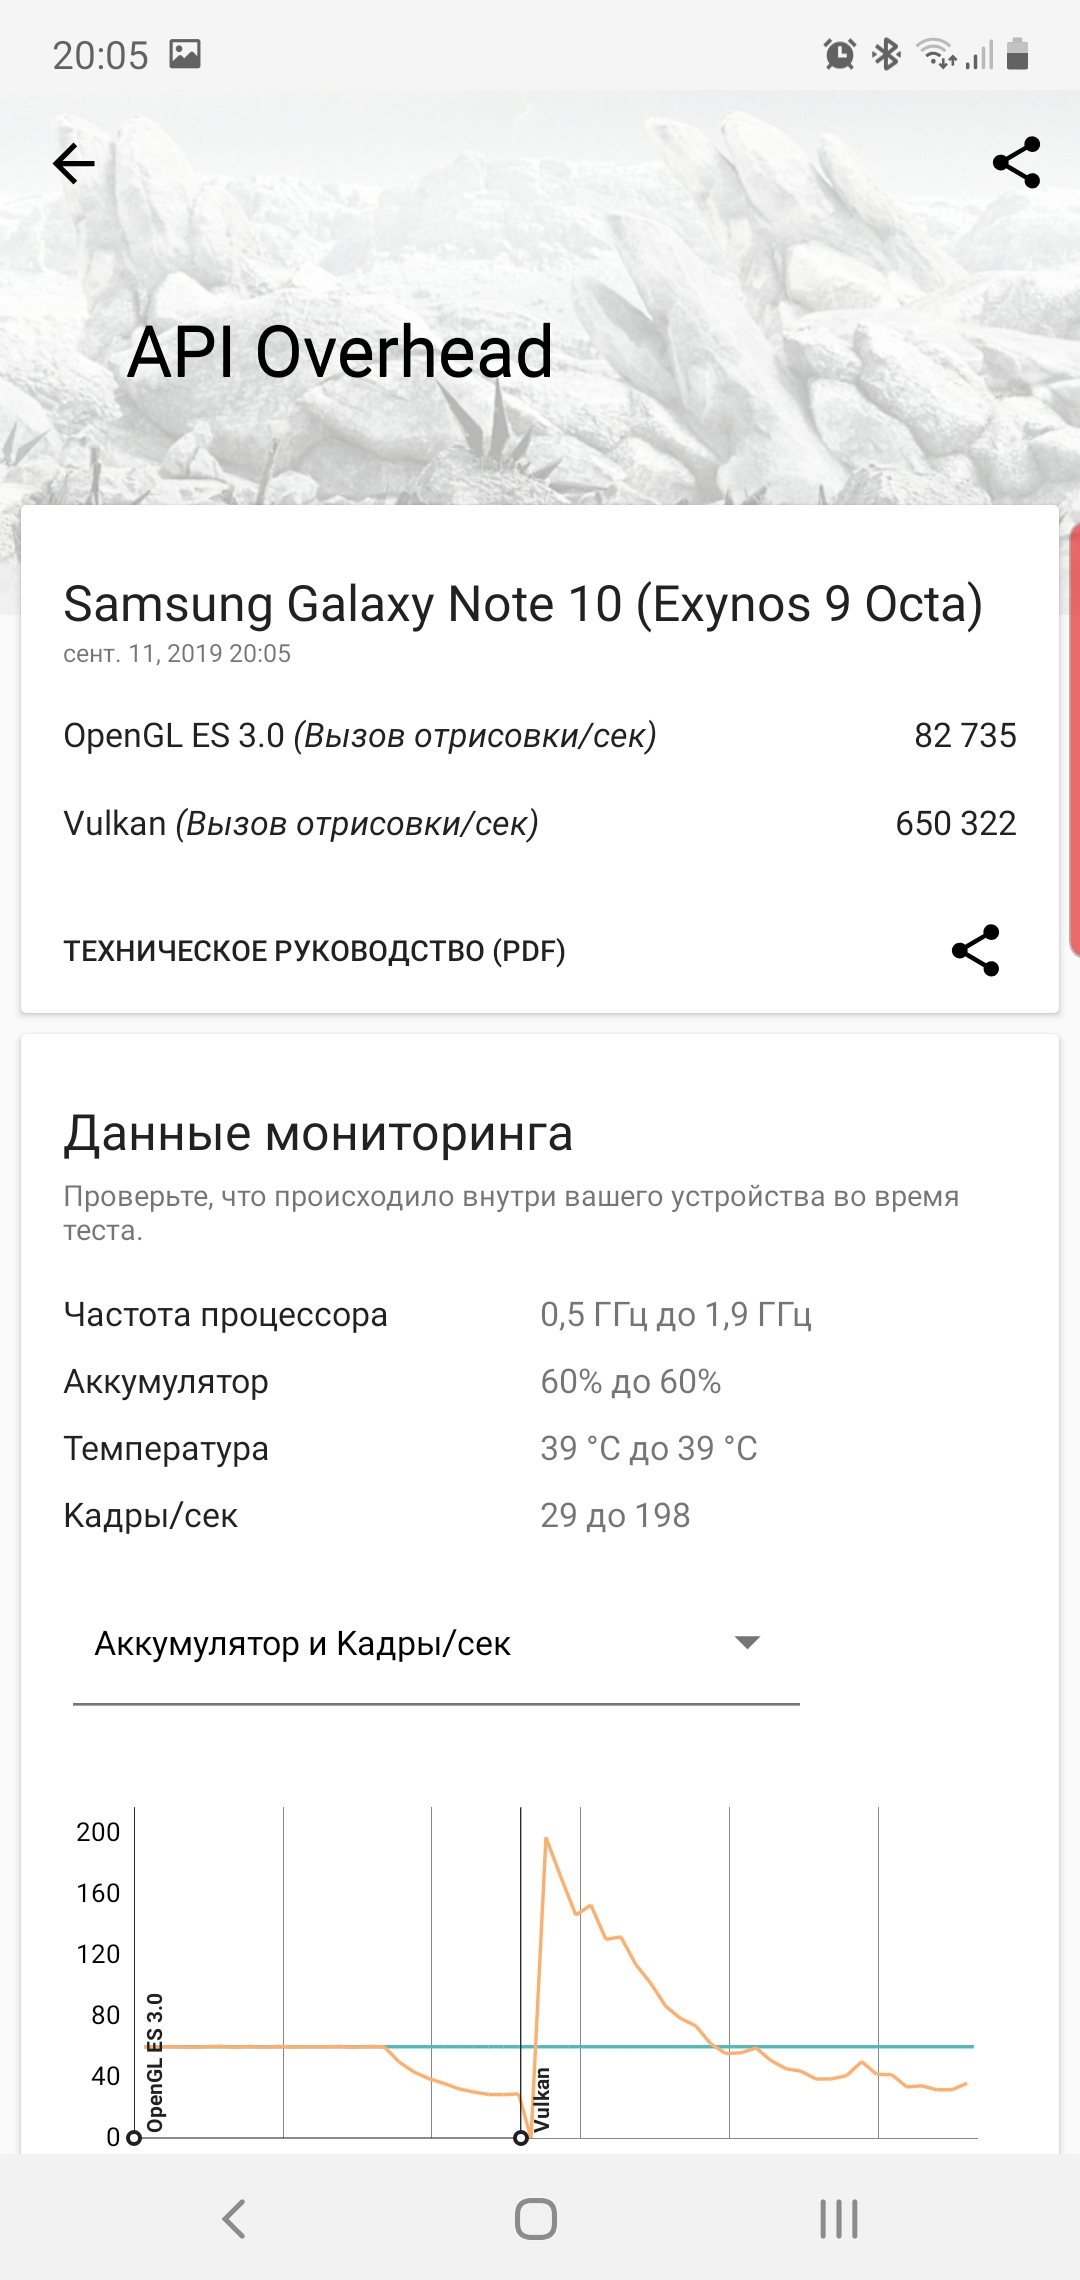 Обзор Samsung Galaxy Note10: всё тот же флагман, но поменьше-97